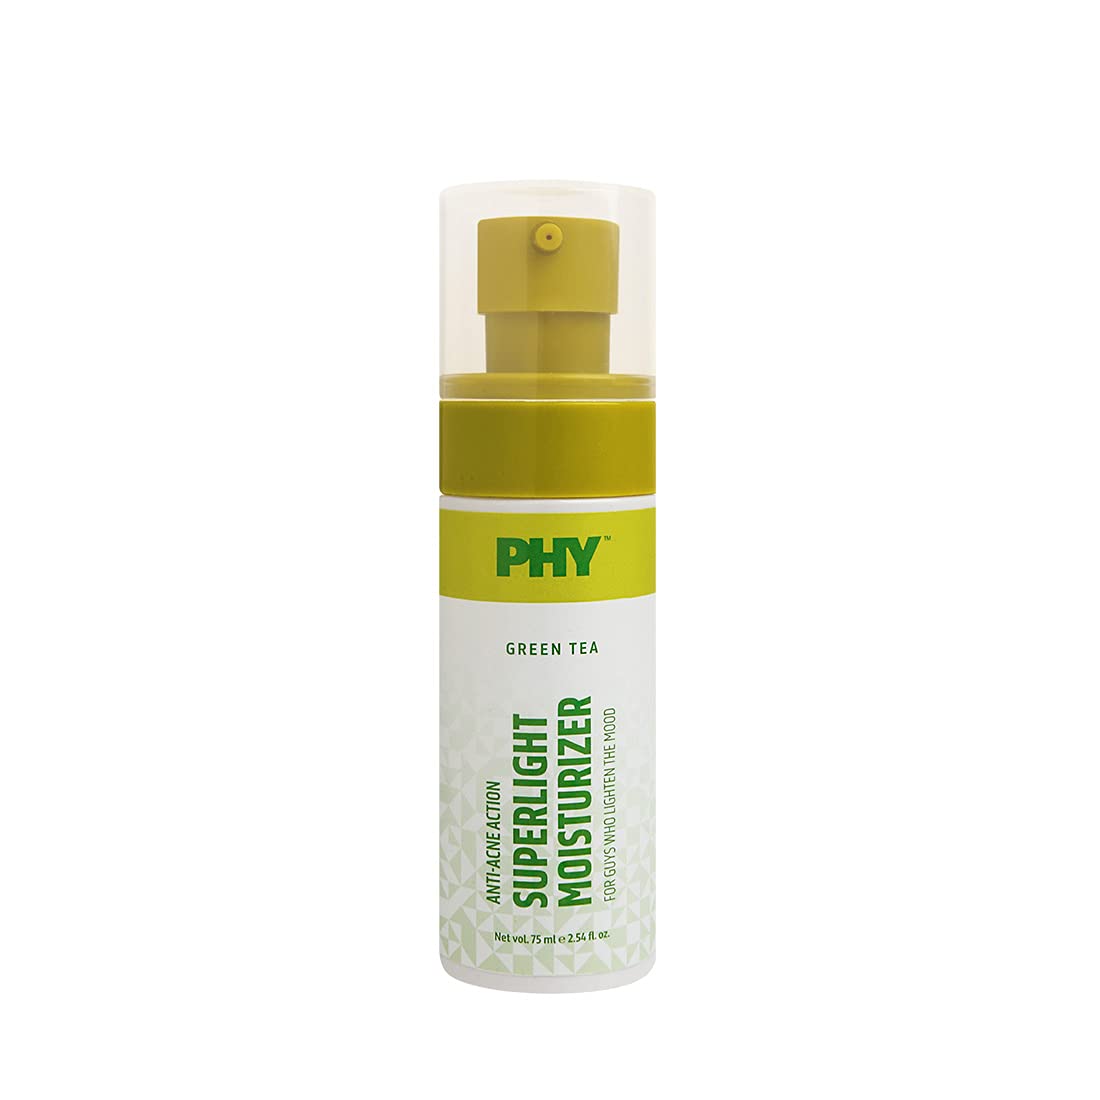 Phy (for guys) Green Tea Superlight Moisturizer